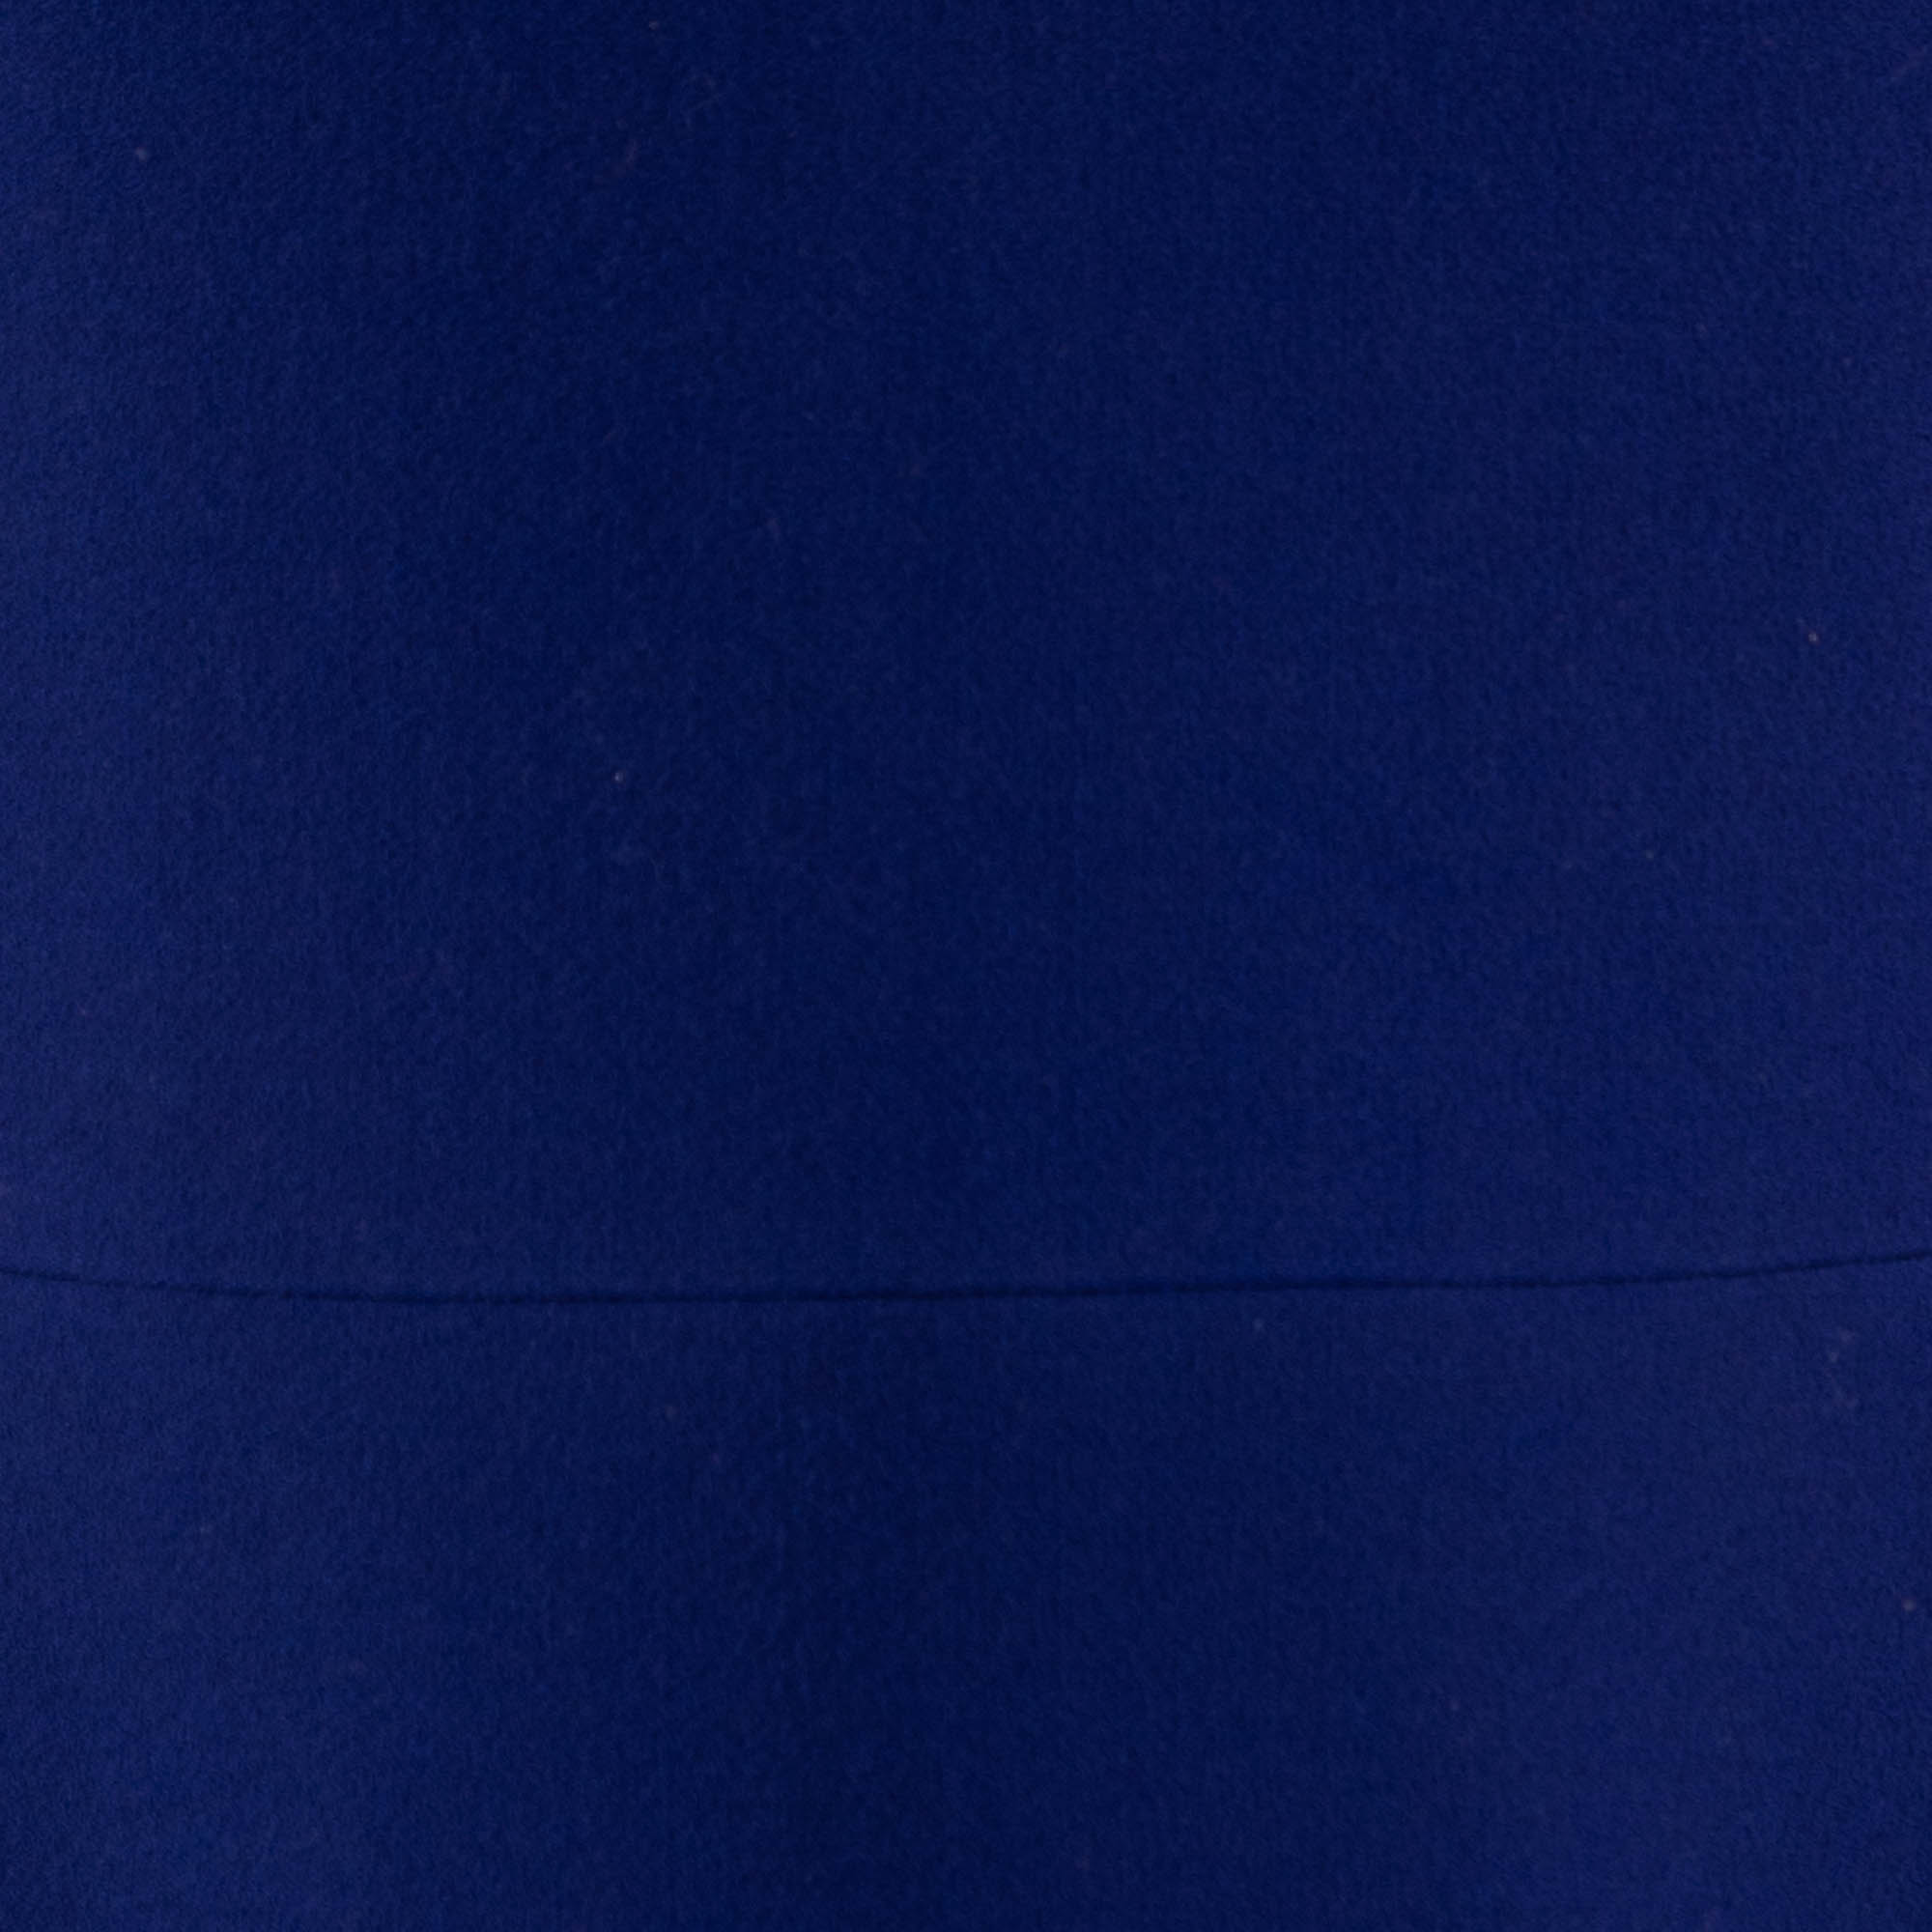 Stella McCartney Navy Blue Floral Wool Jacquard Knit Skater Mini Dress L